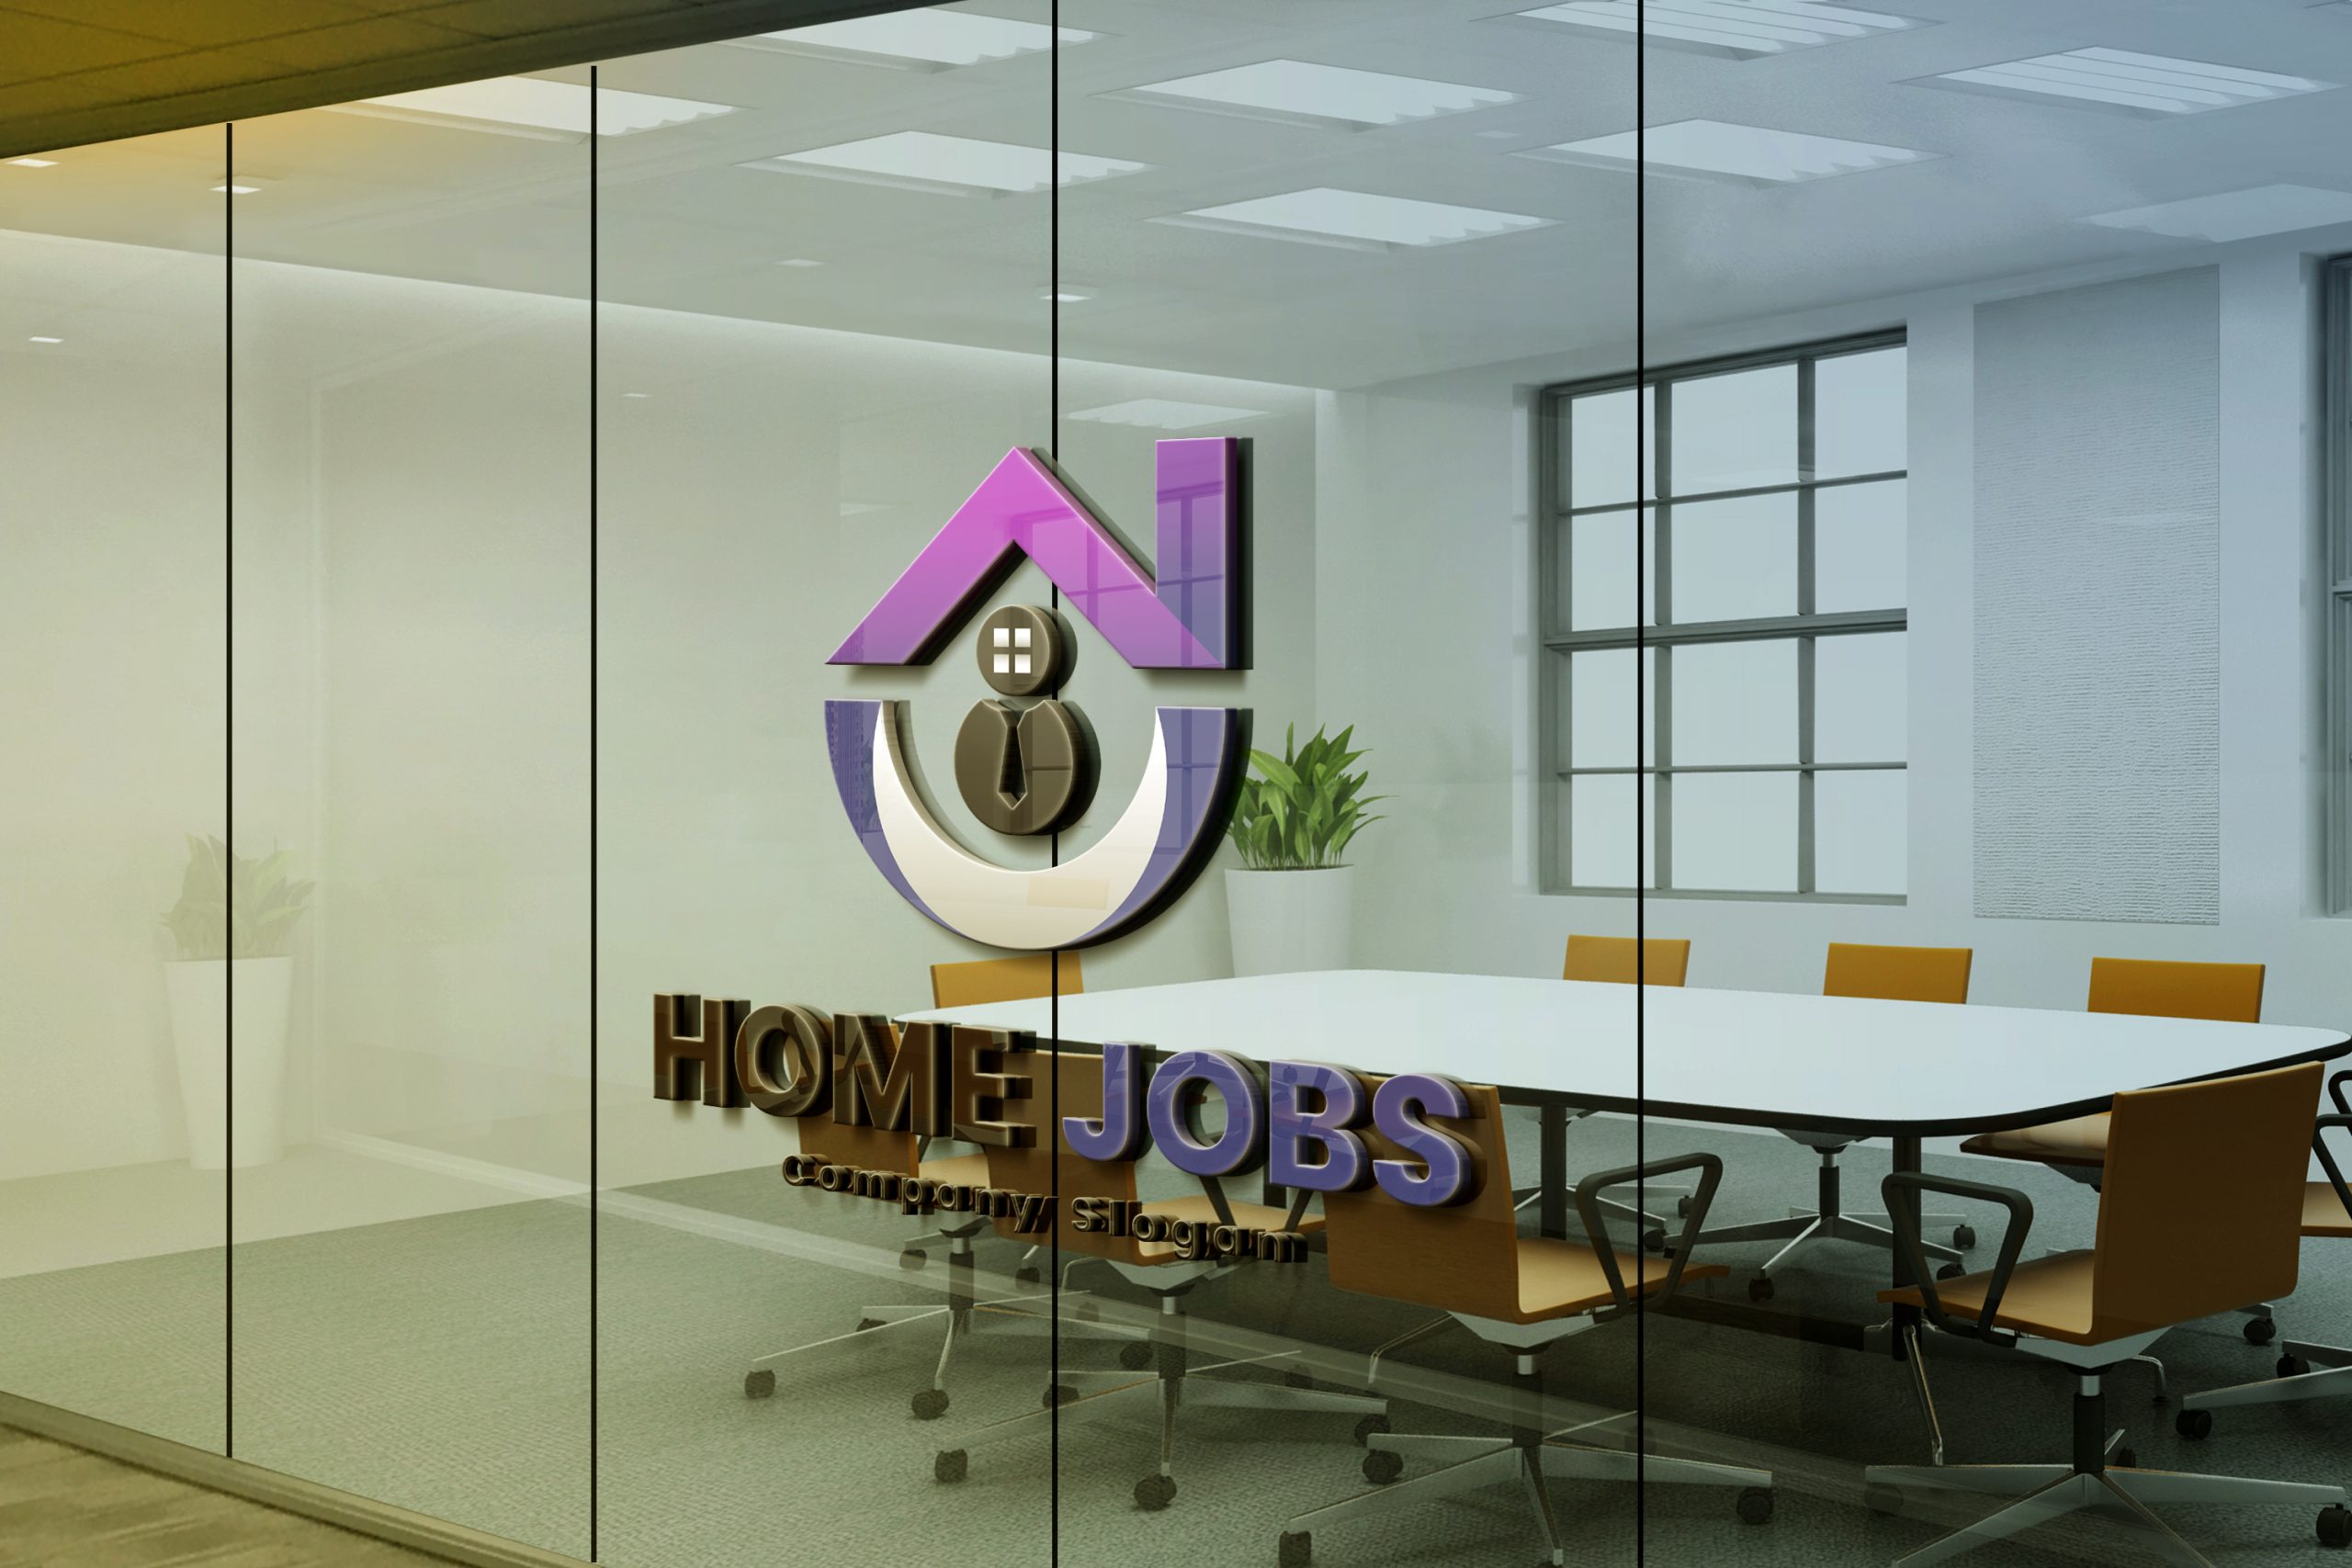 Download Job Company Logo Design Template